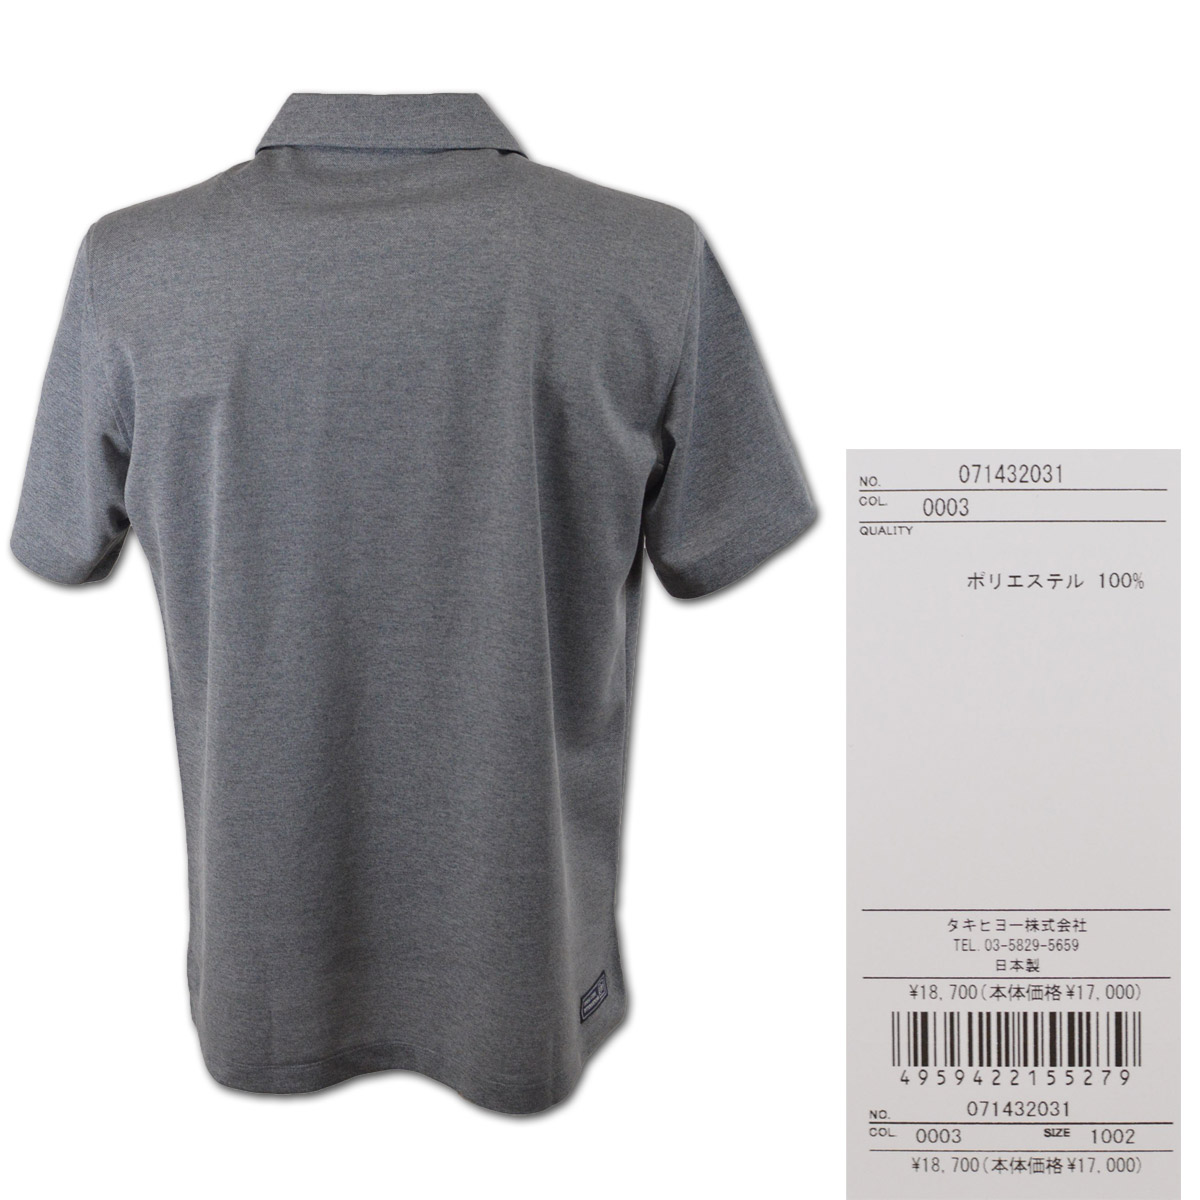 ZOY 半袖ポロシャツ (M)(L) メンズ ゴルフウェア ゾーイ 071432031-03